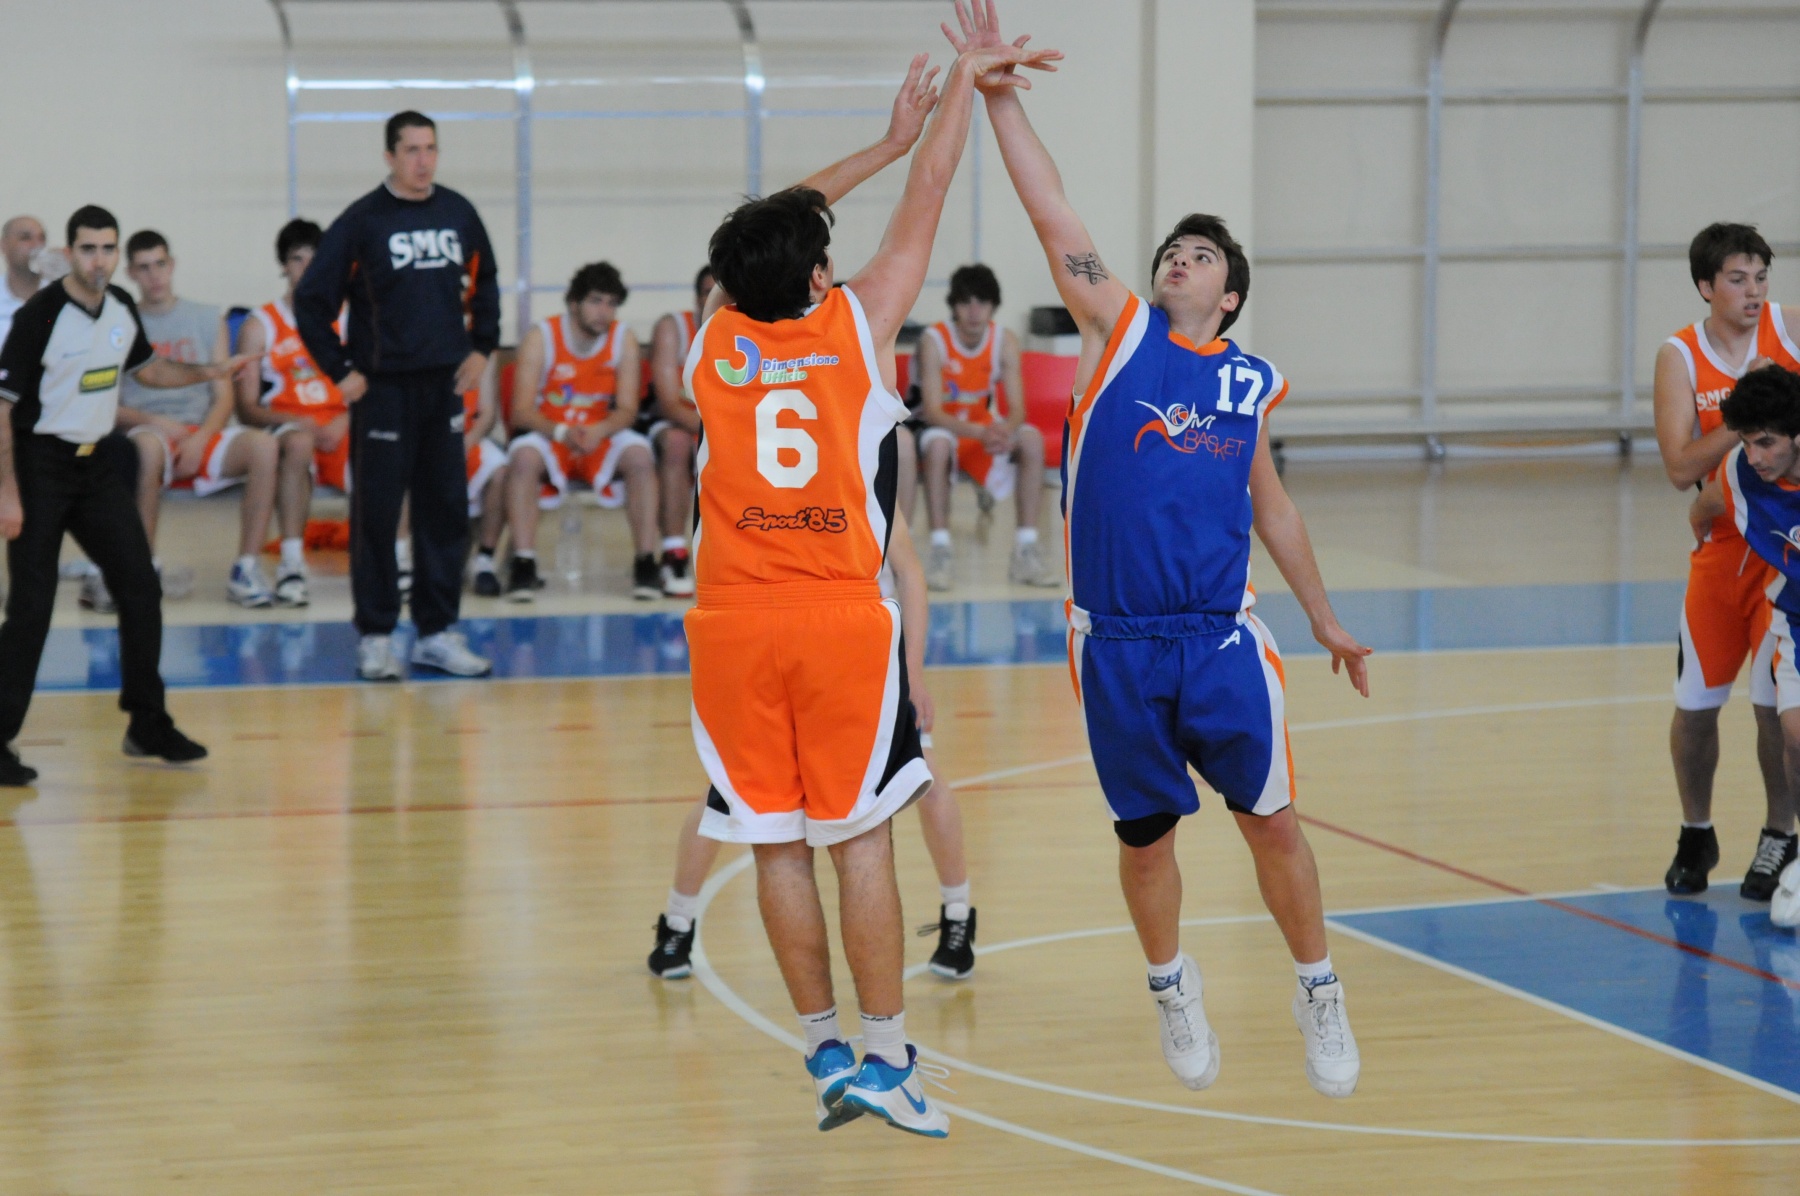 2010-05-23-SMG-Vivibasket-Napoli-183